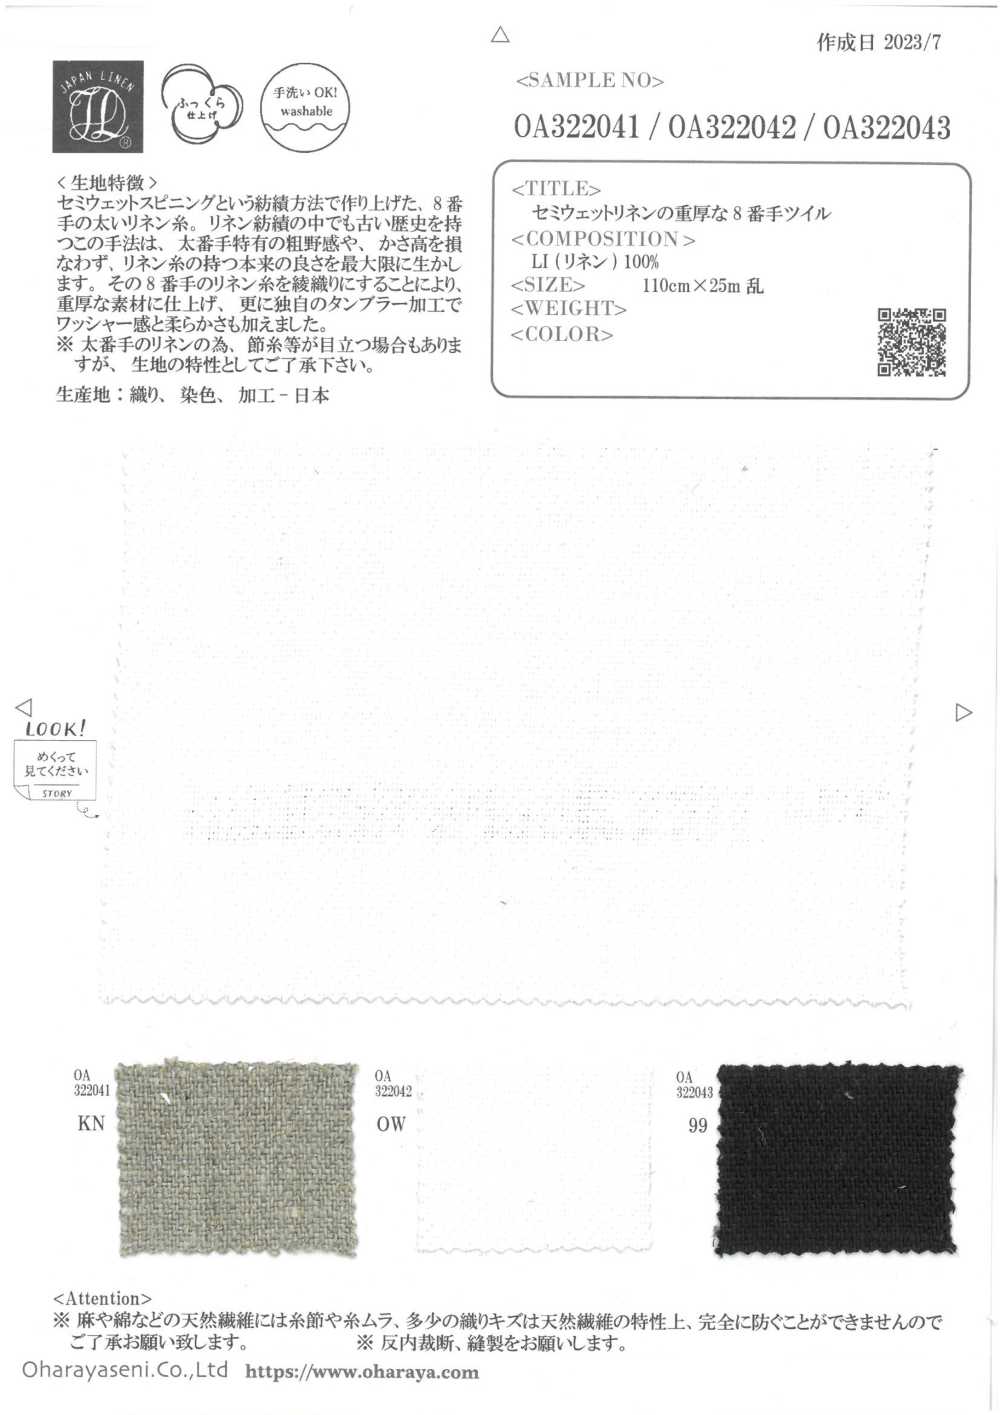 OA322043 Sergé épais #8 De Lin Semi-humide[Fabrication De Textile] Oharayaseni